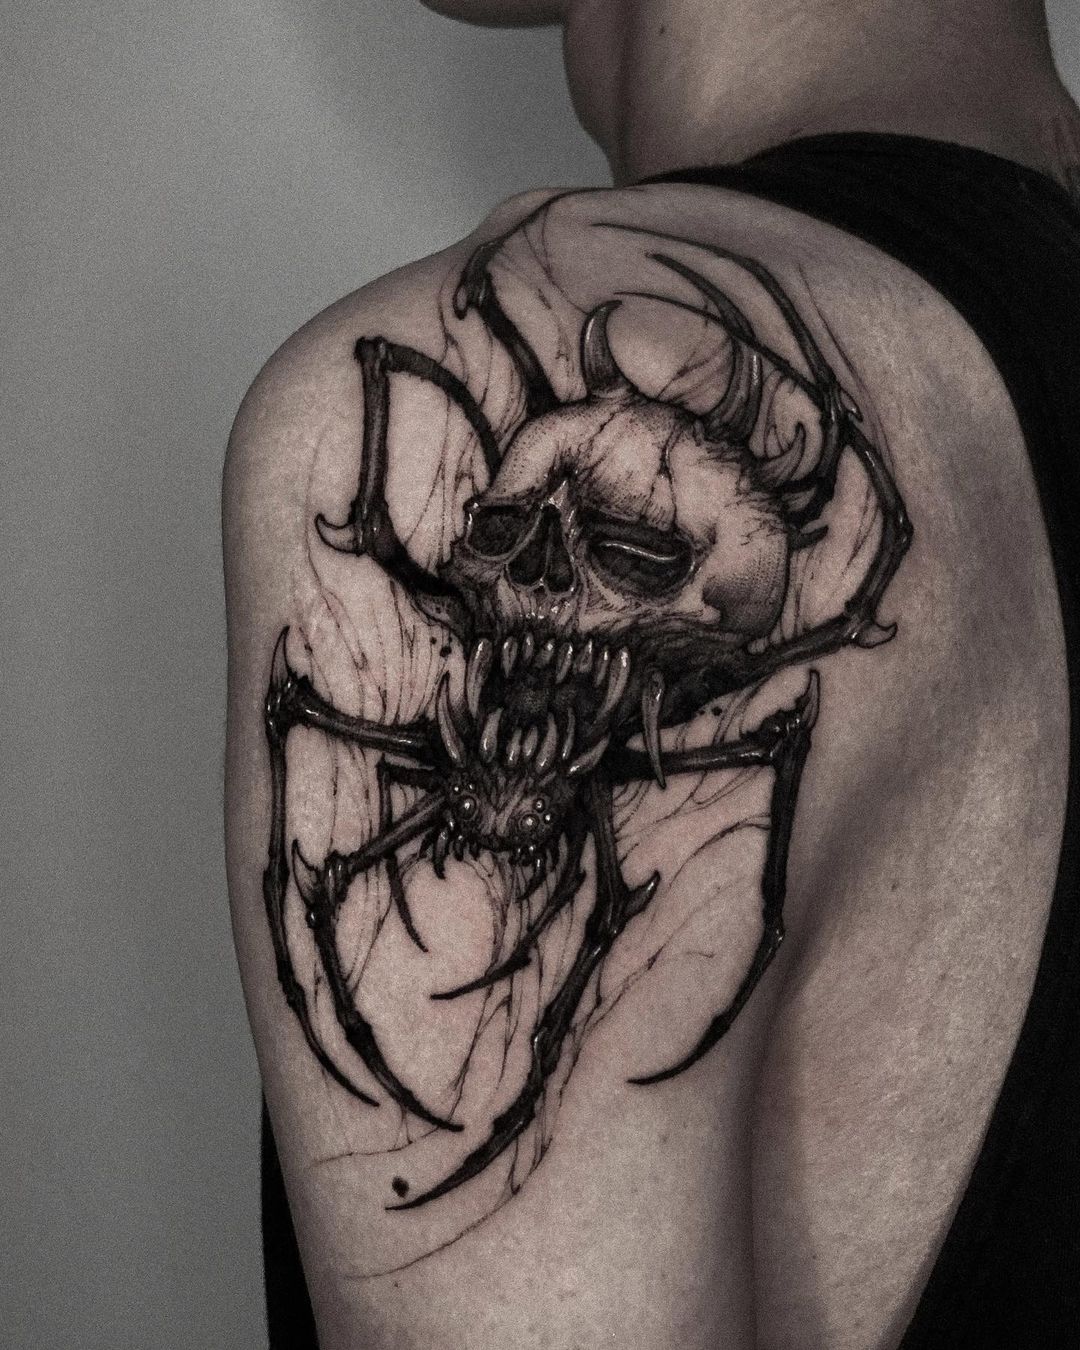 Spider tattoo design by rokyeom